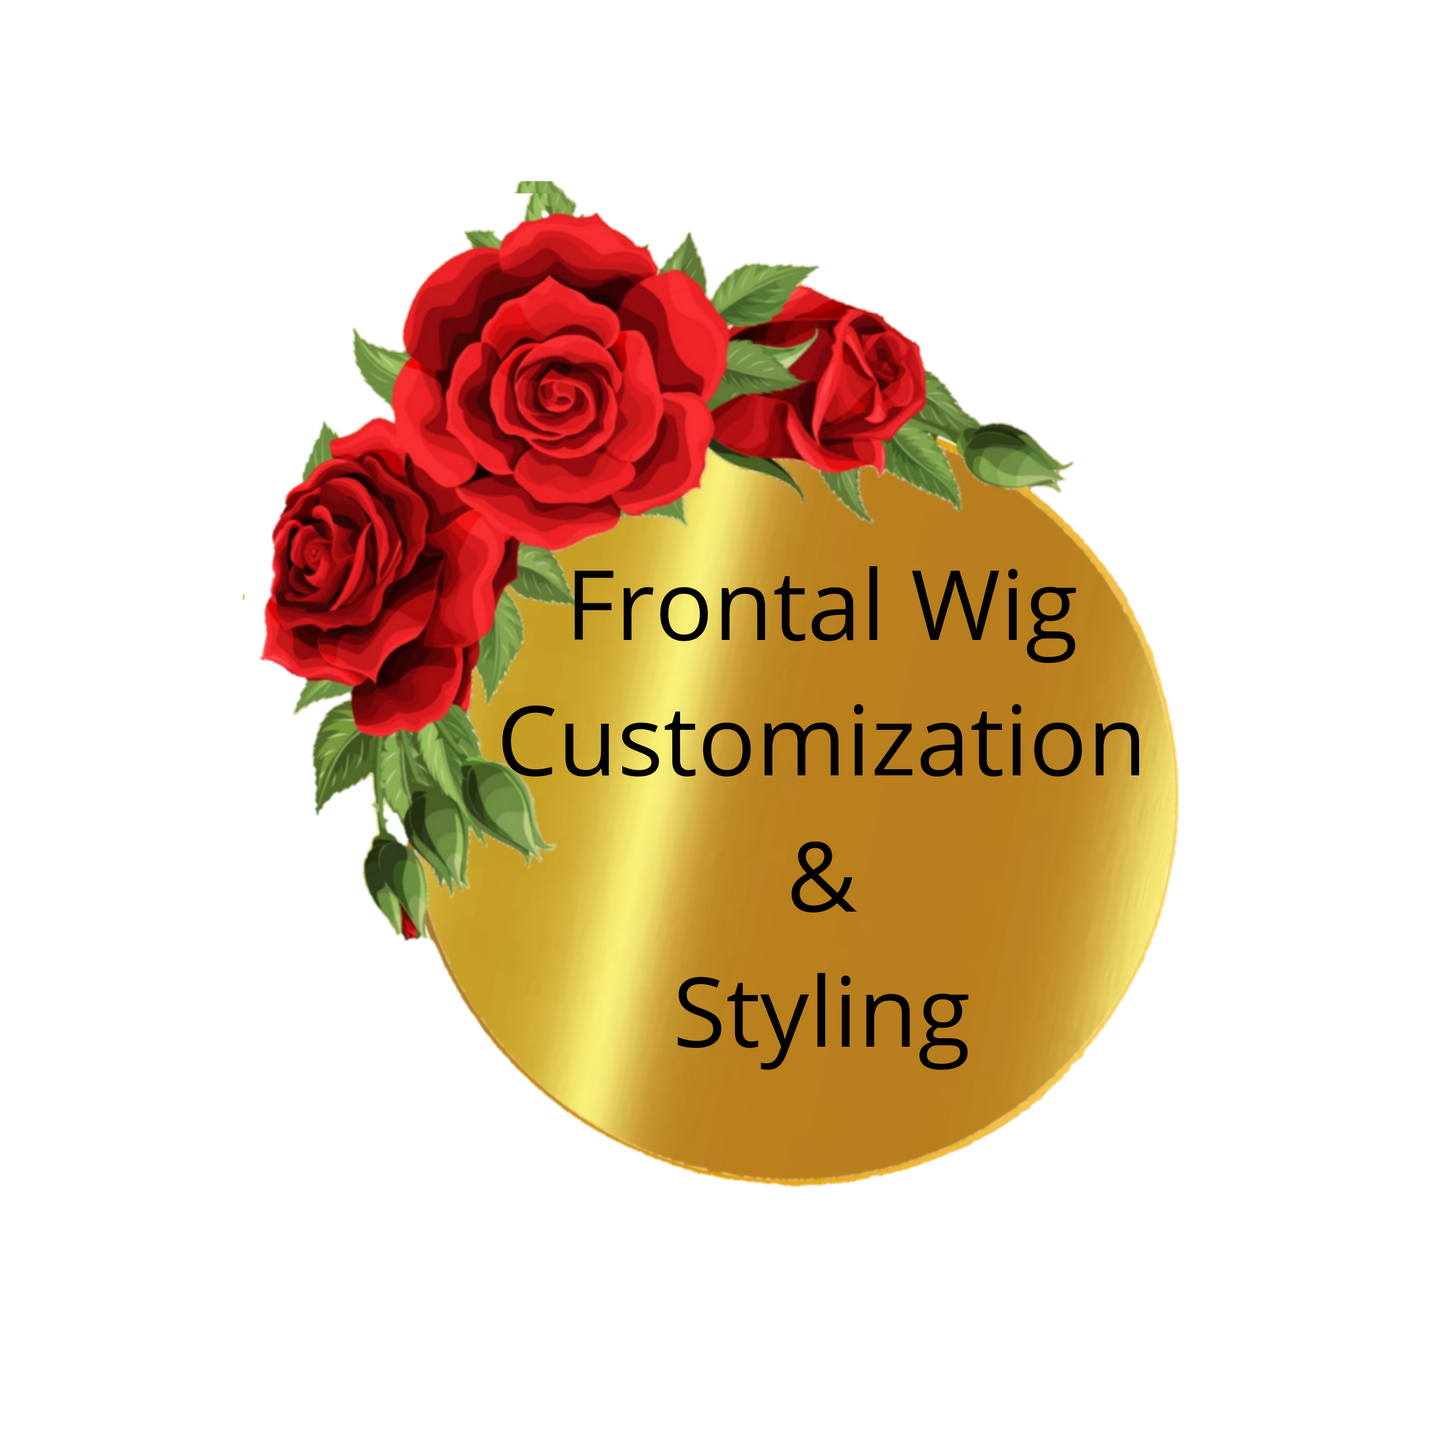 Frontal Wig Customization & Styling